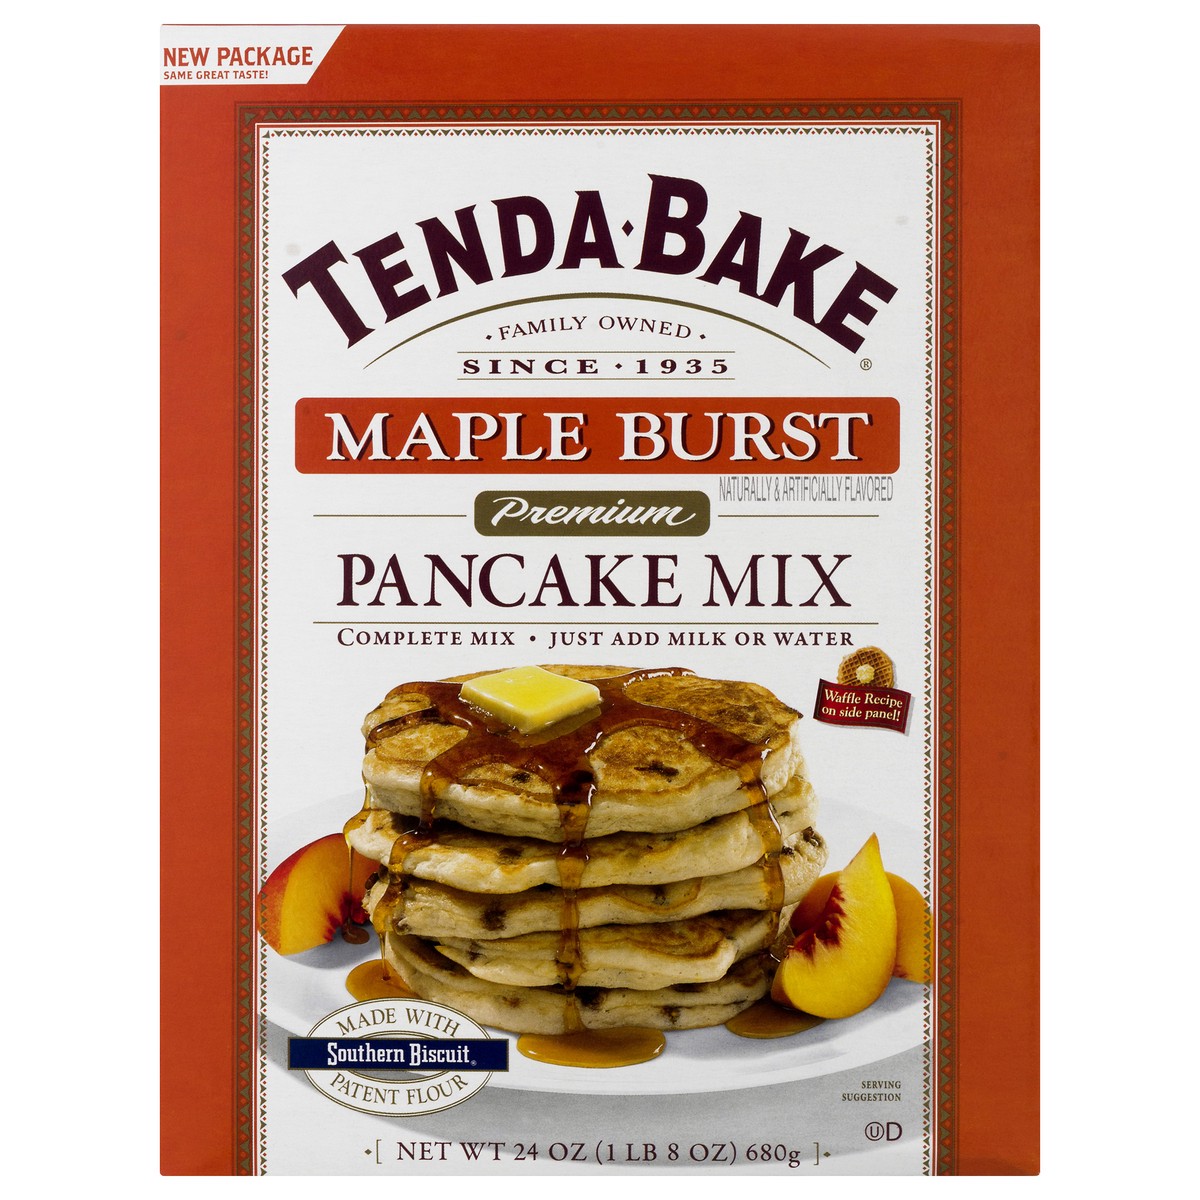 slide 1 of 10, Tenda-Bake Pancake Mix, Maple Burst, Premium, 24 oz